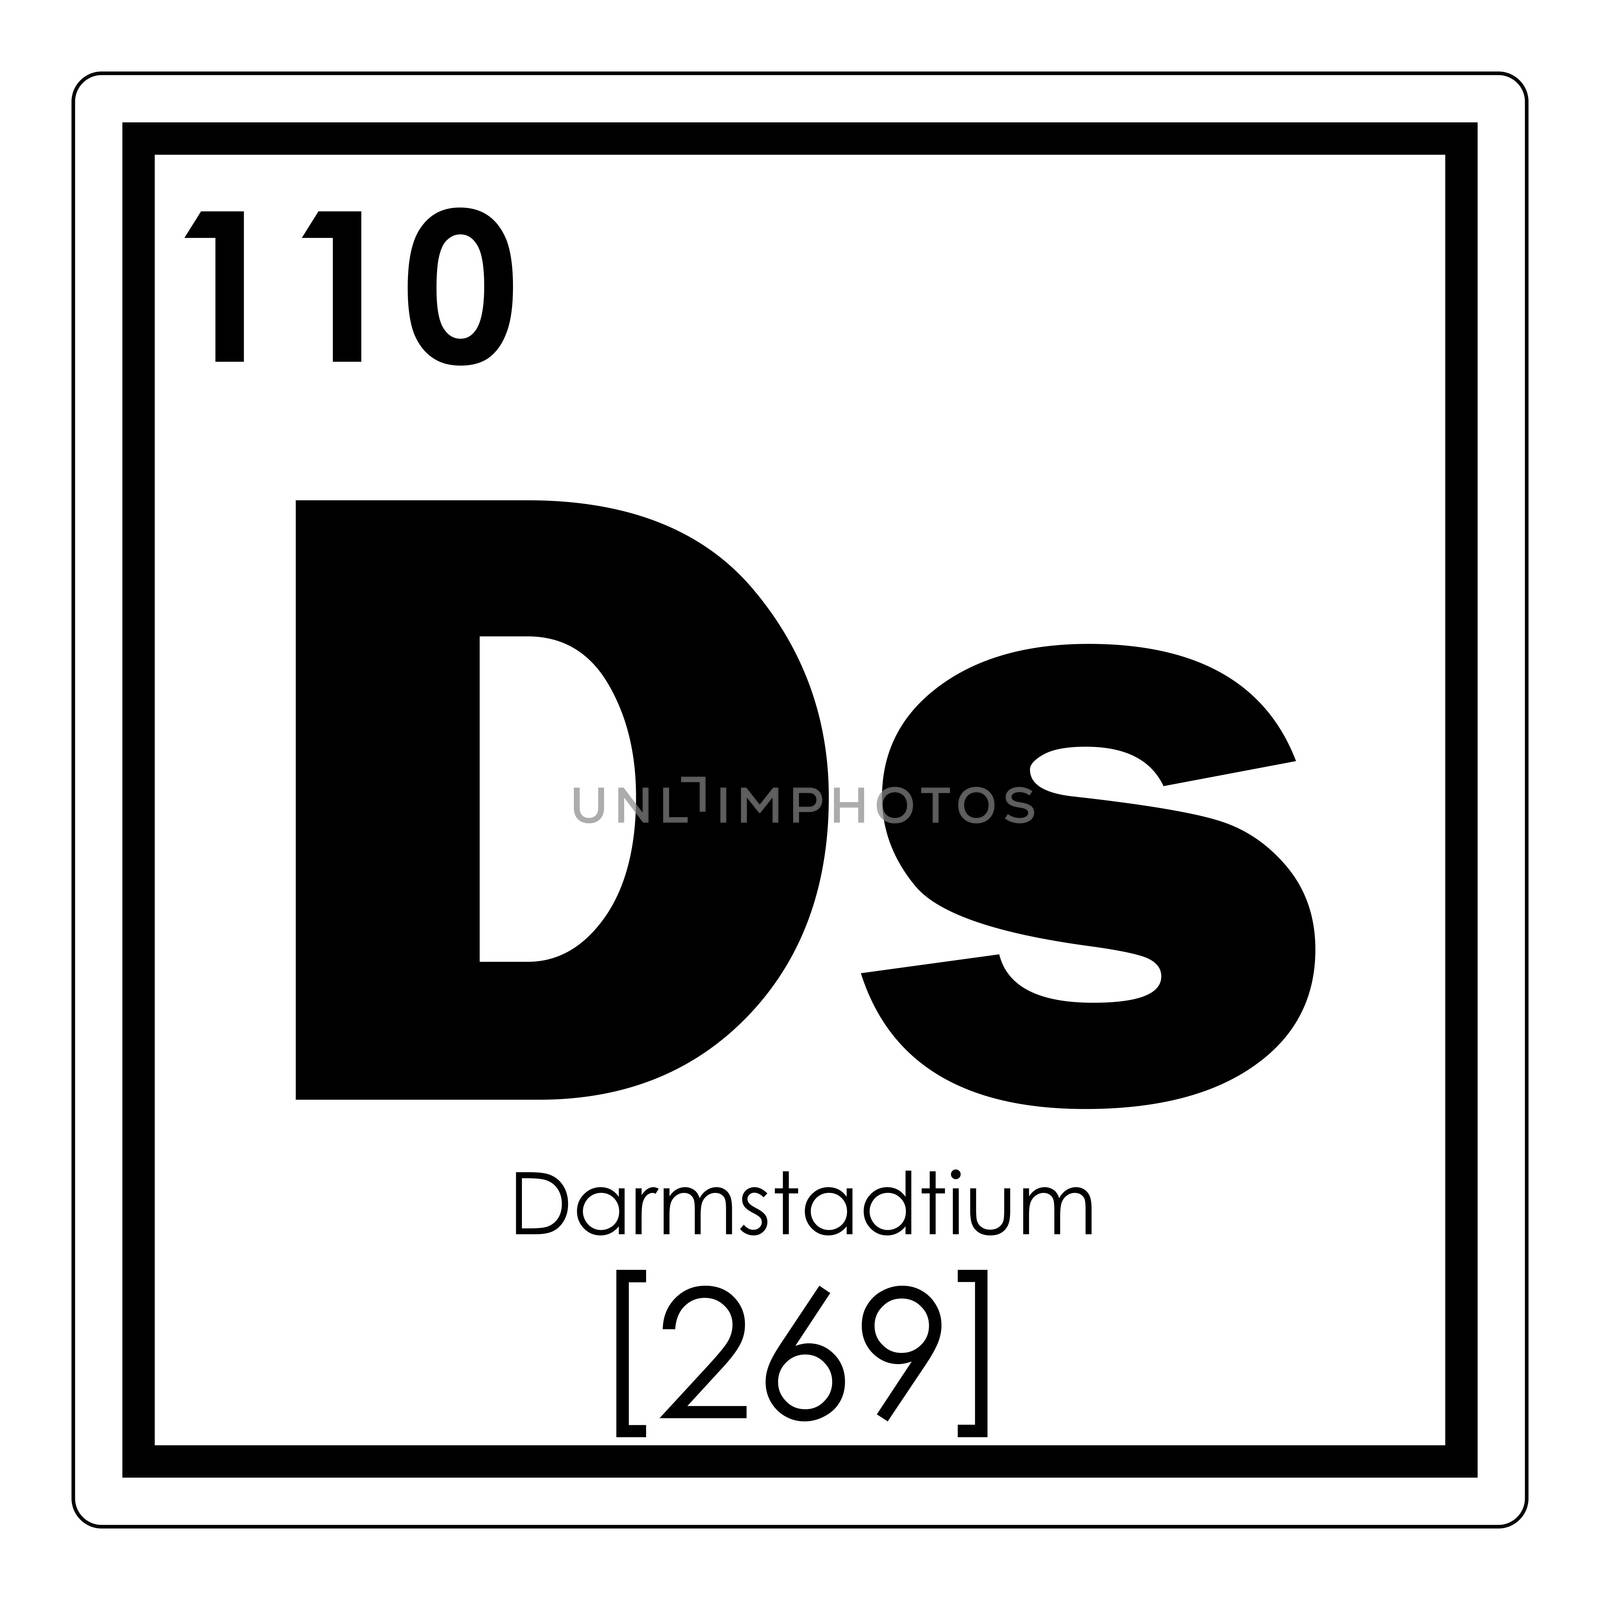 Darmstadtium chemical element by tony4urban